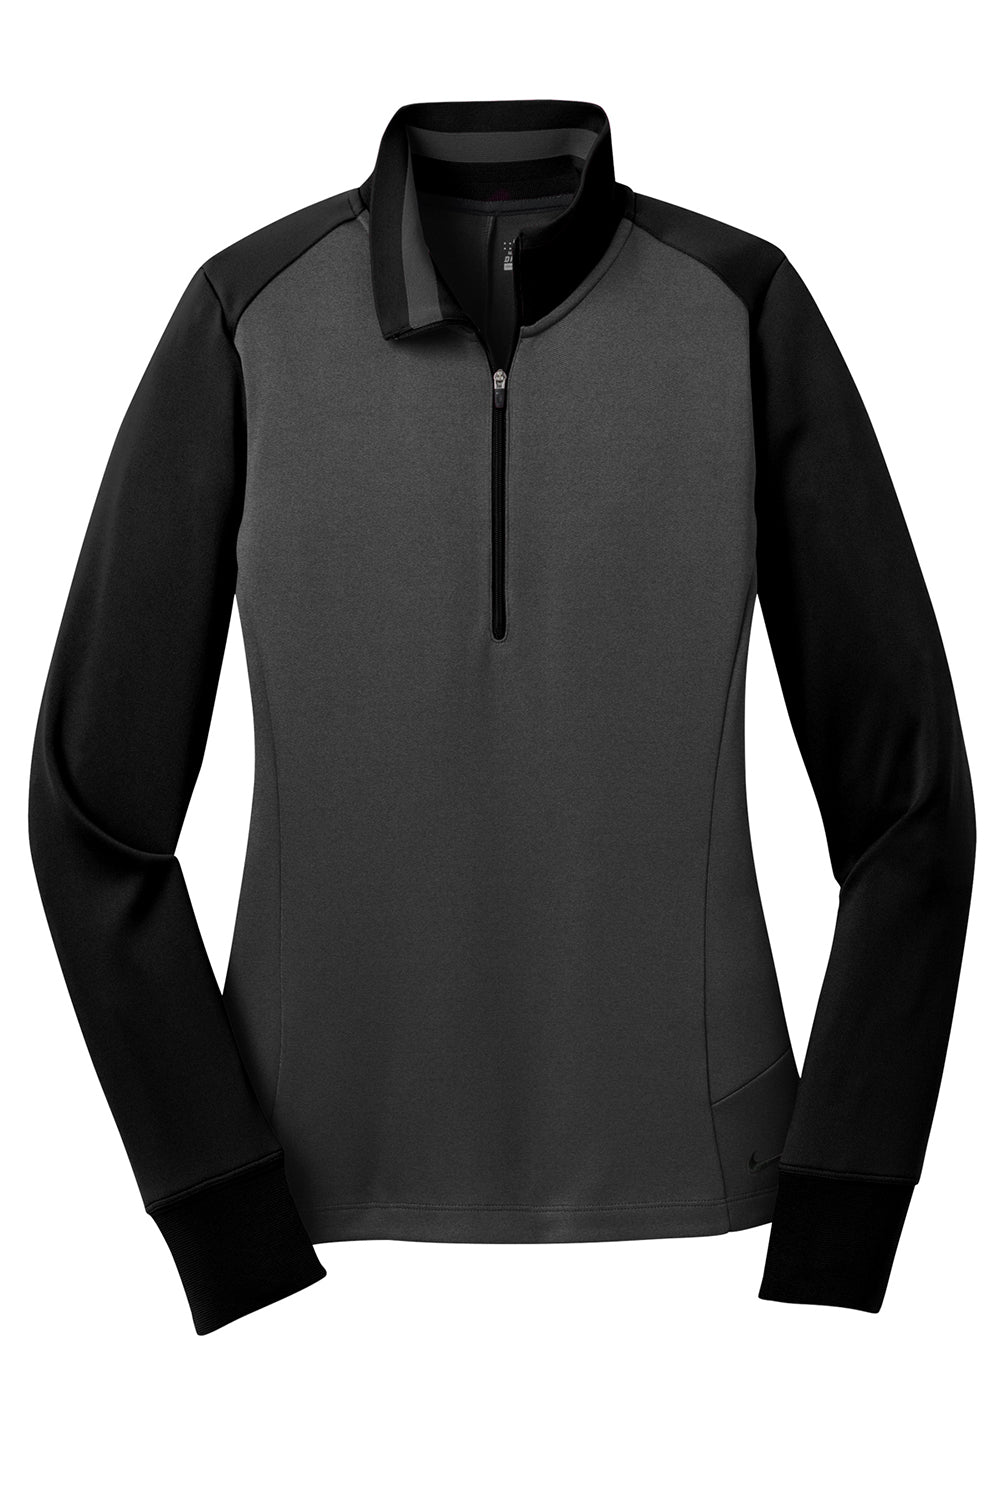 Nike 578674 Womens Dri-Fit Moisture Wicking 1/4 Zip Sweatshirt Anthracite Grey/Black Flat Front